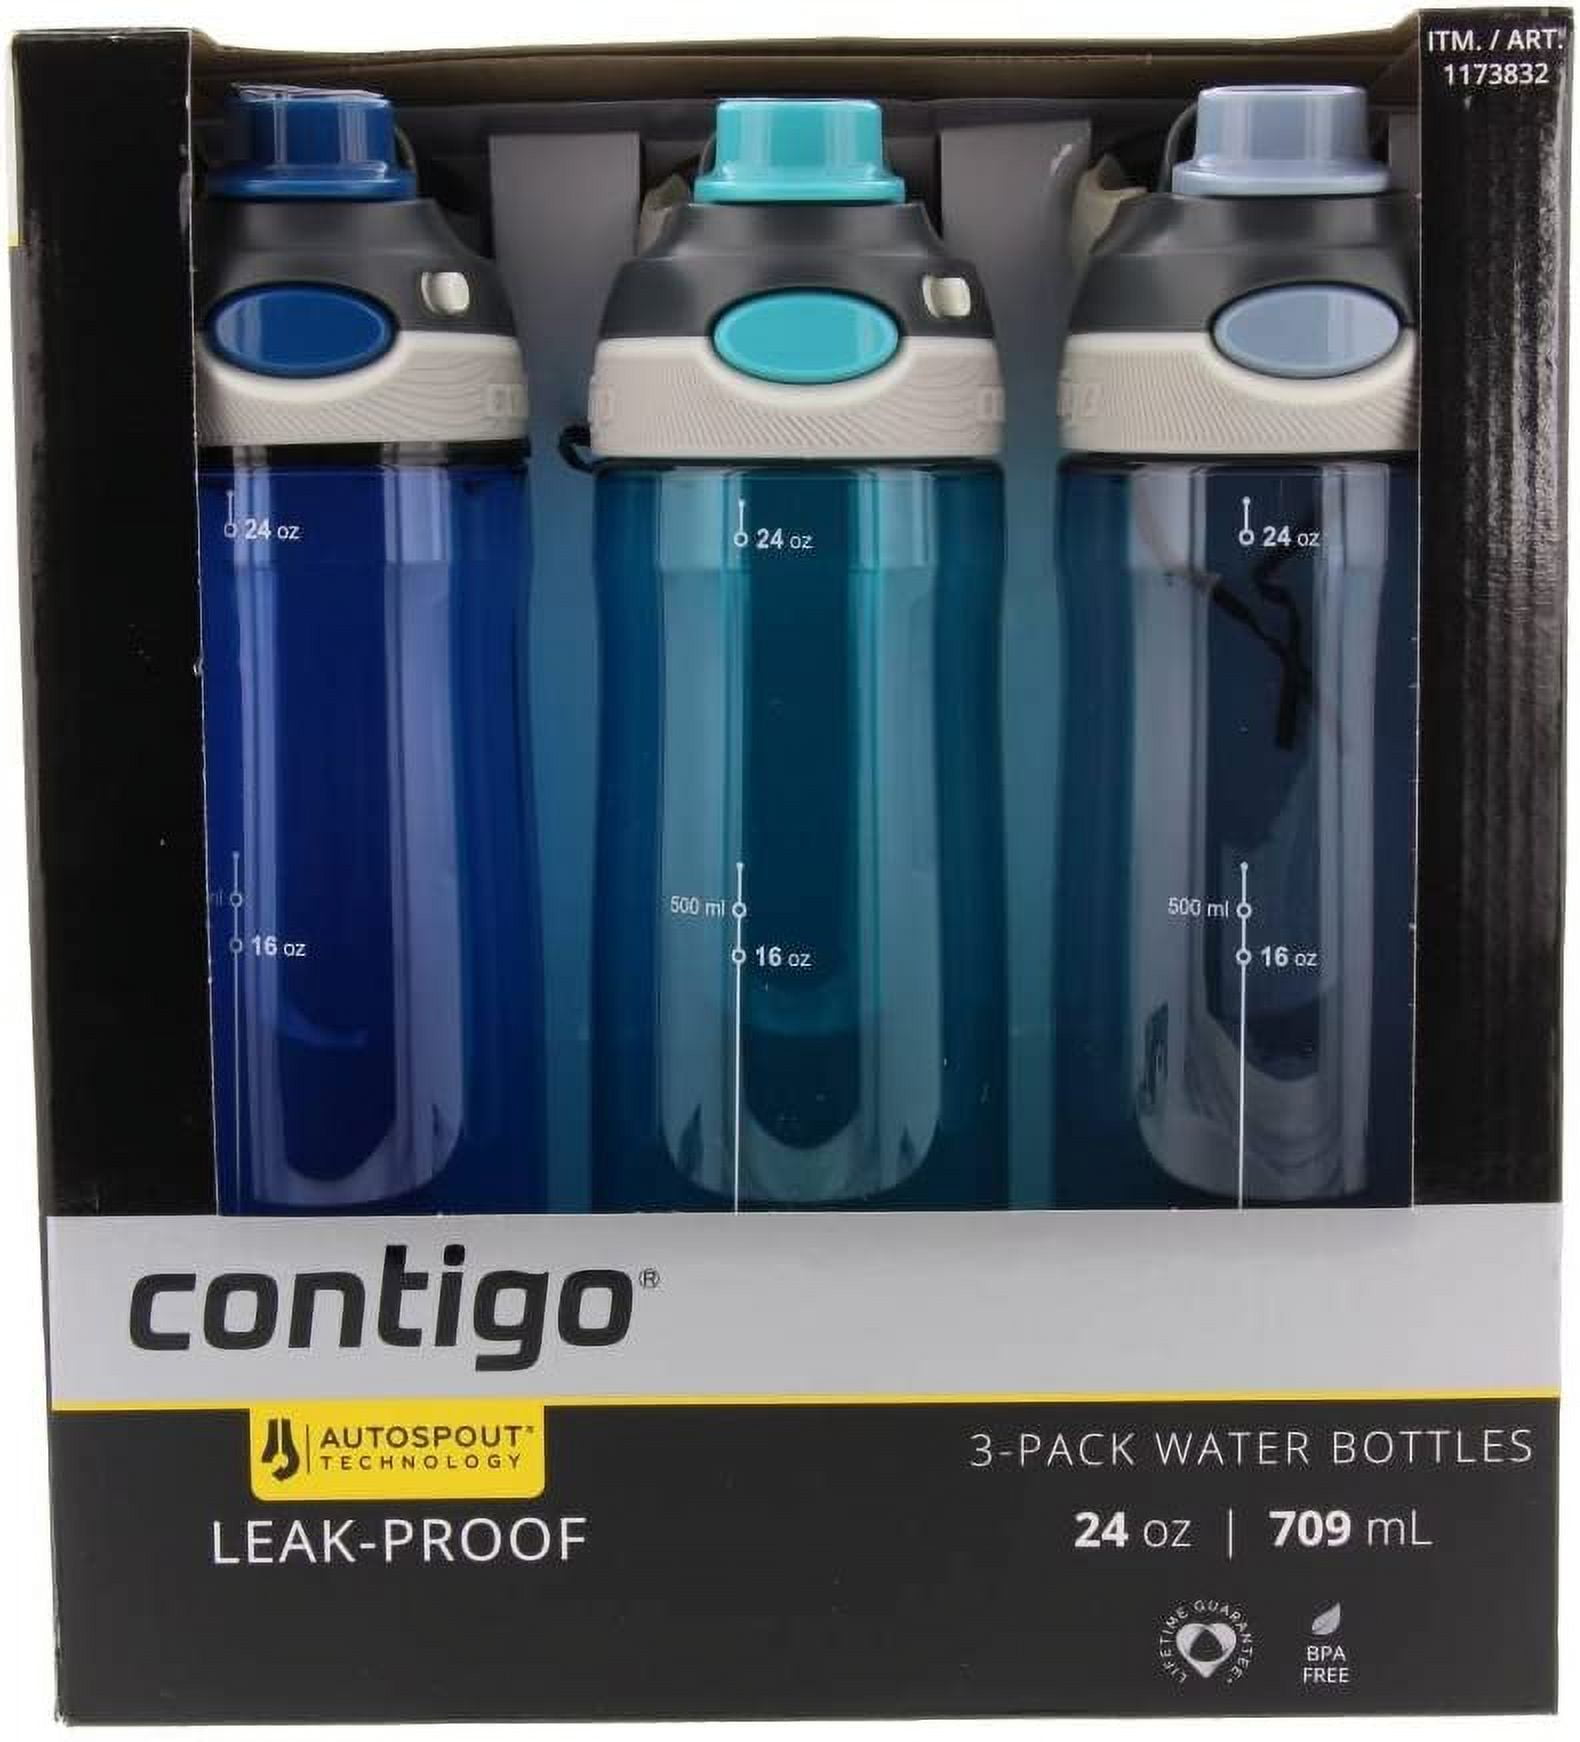 Contigo 2094324 Autoseal Fit Spill Proof Water 32 oz. Bottle Smoke/Monaco 2  Pack 